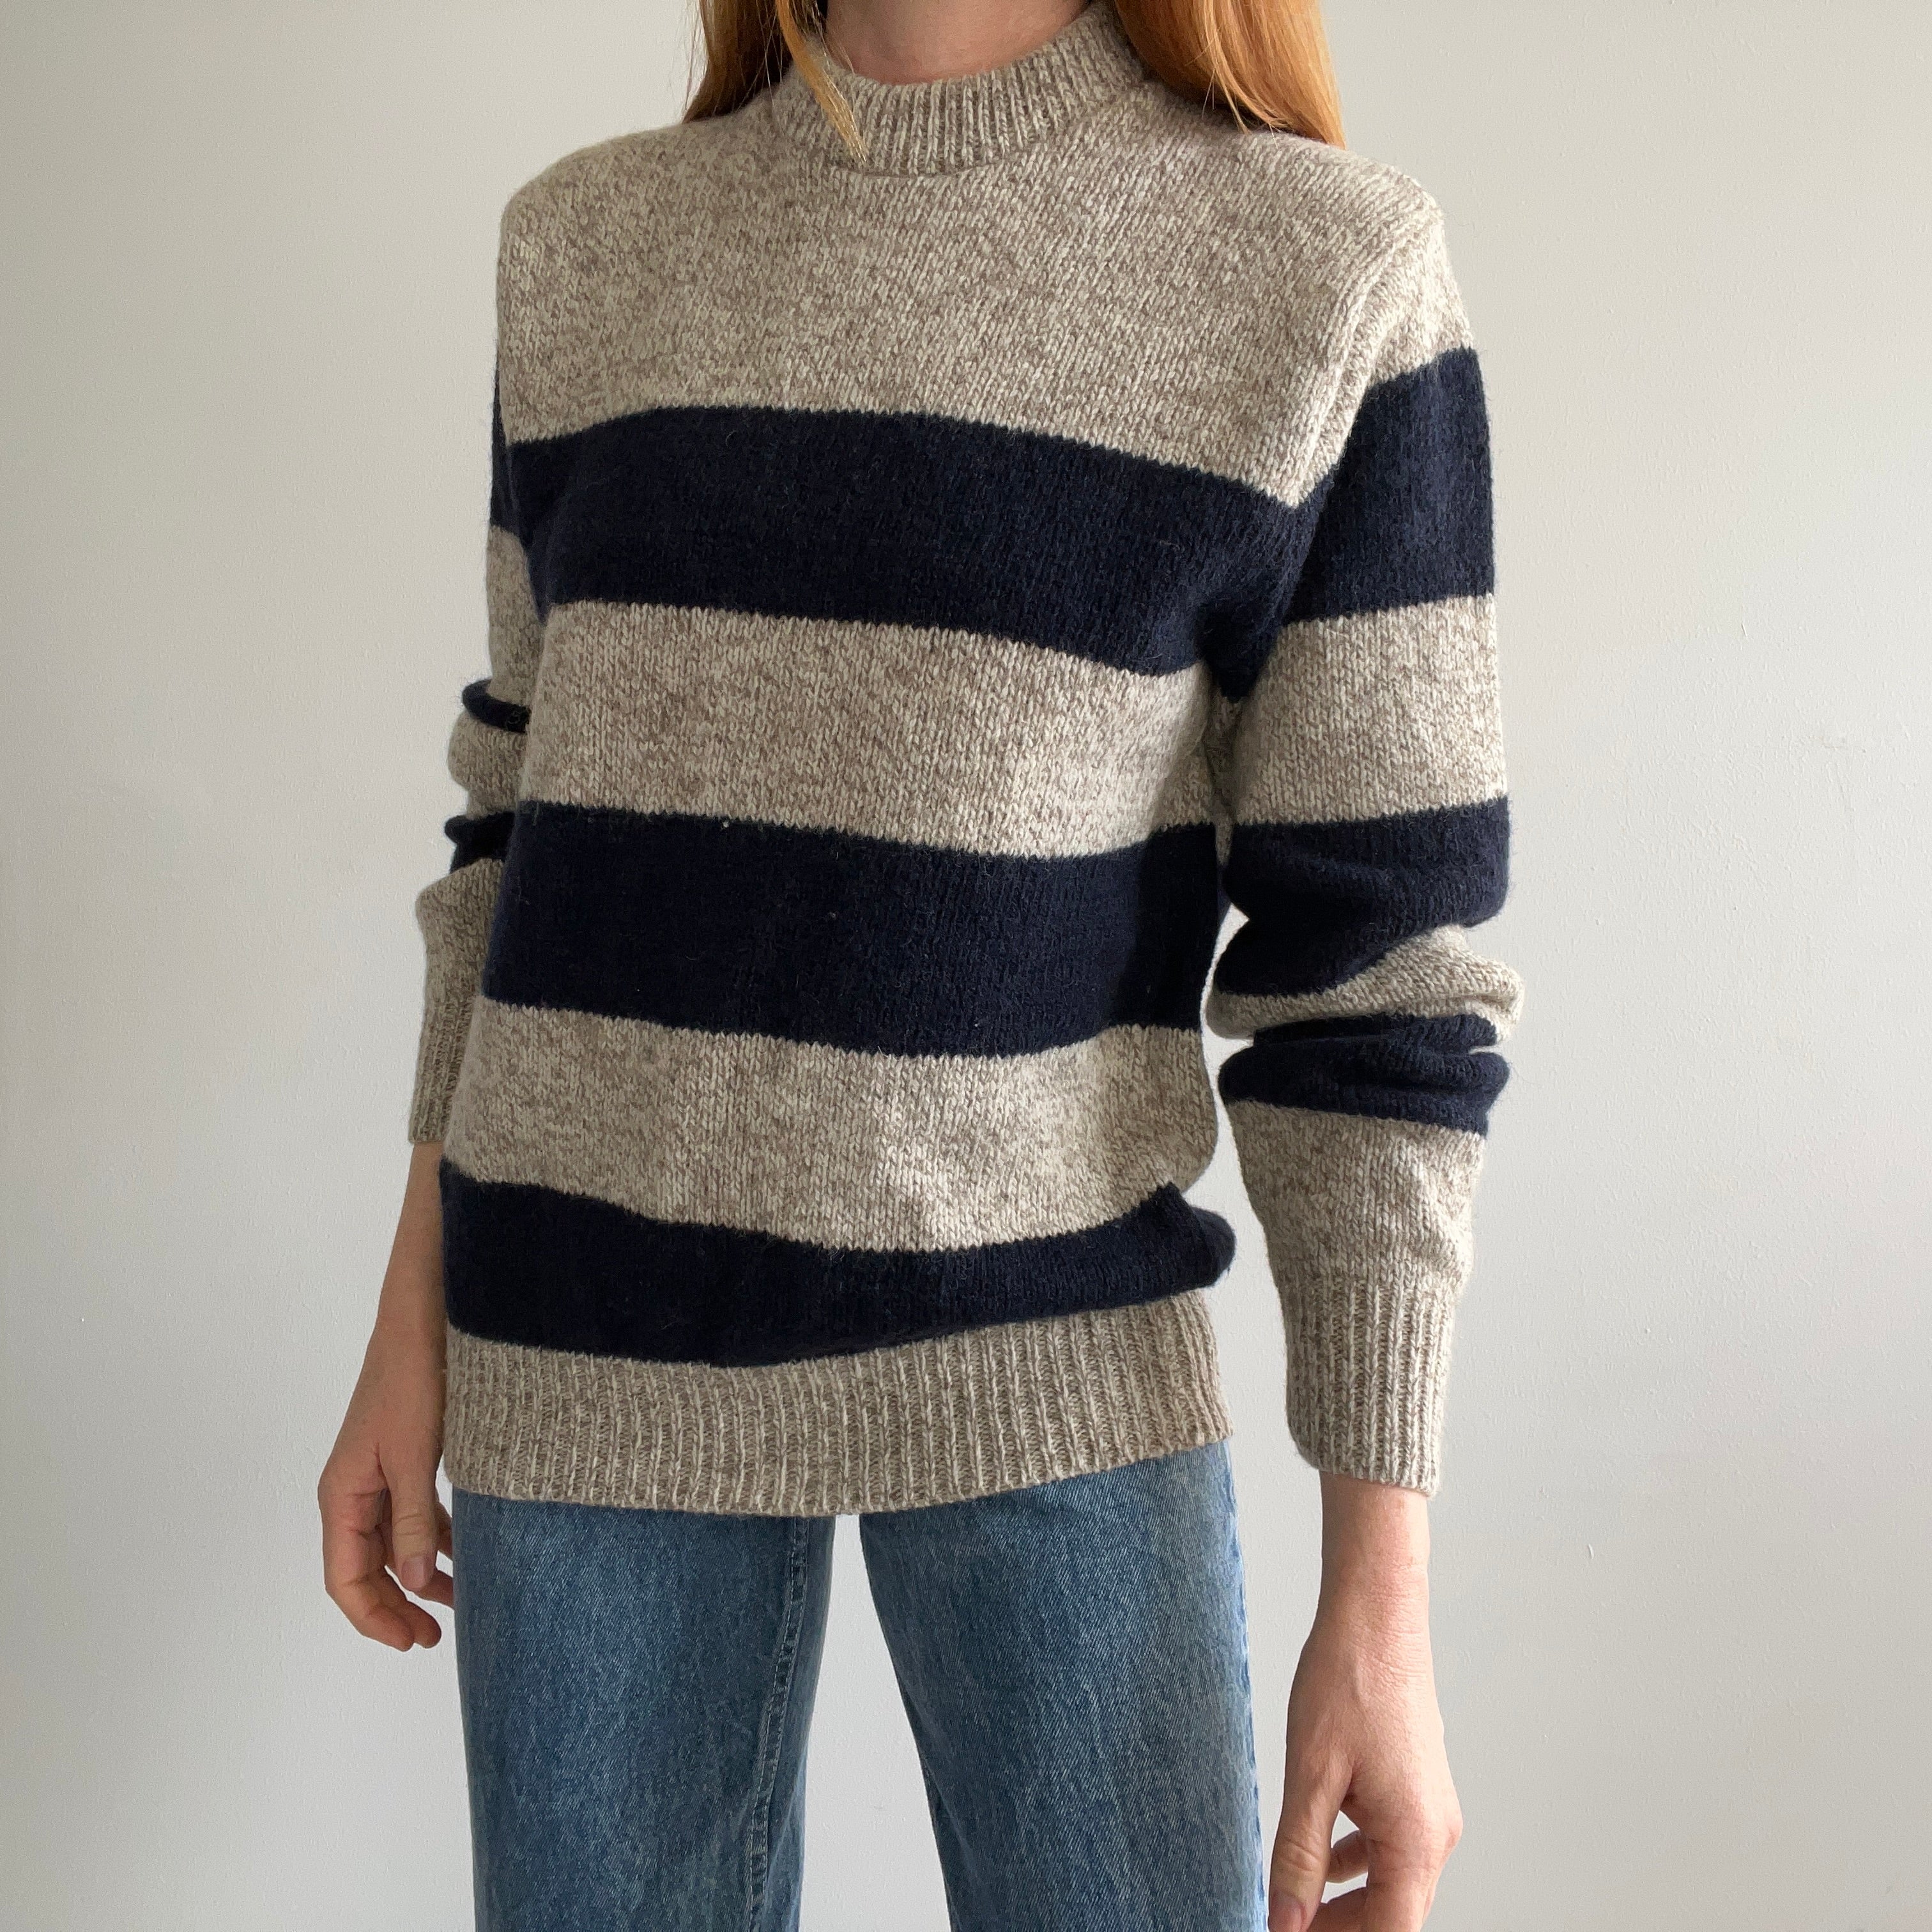 1980s L.L. Bean USA Made Wool Blend Striped Sweater